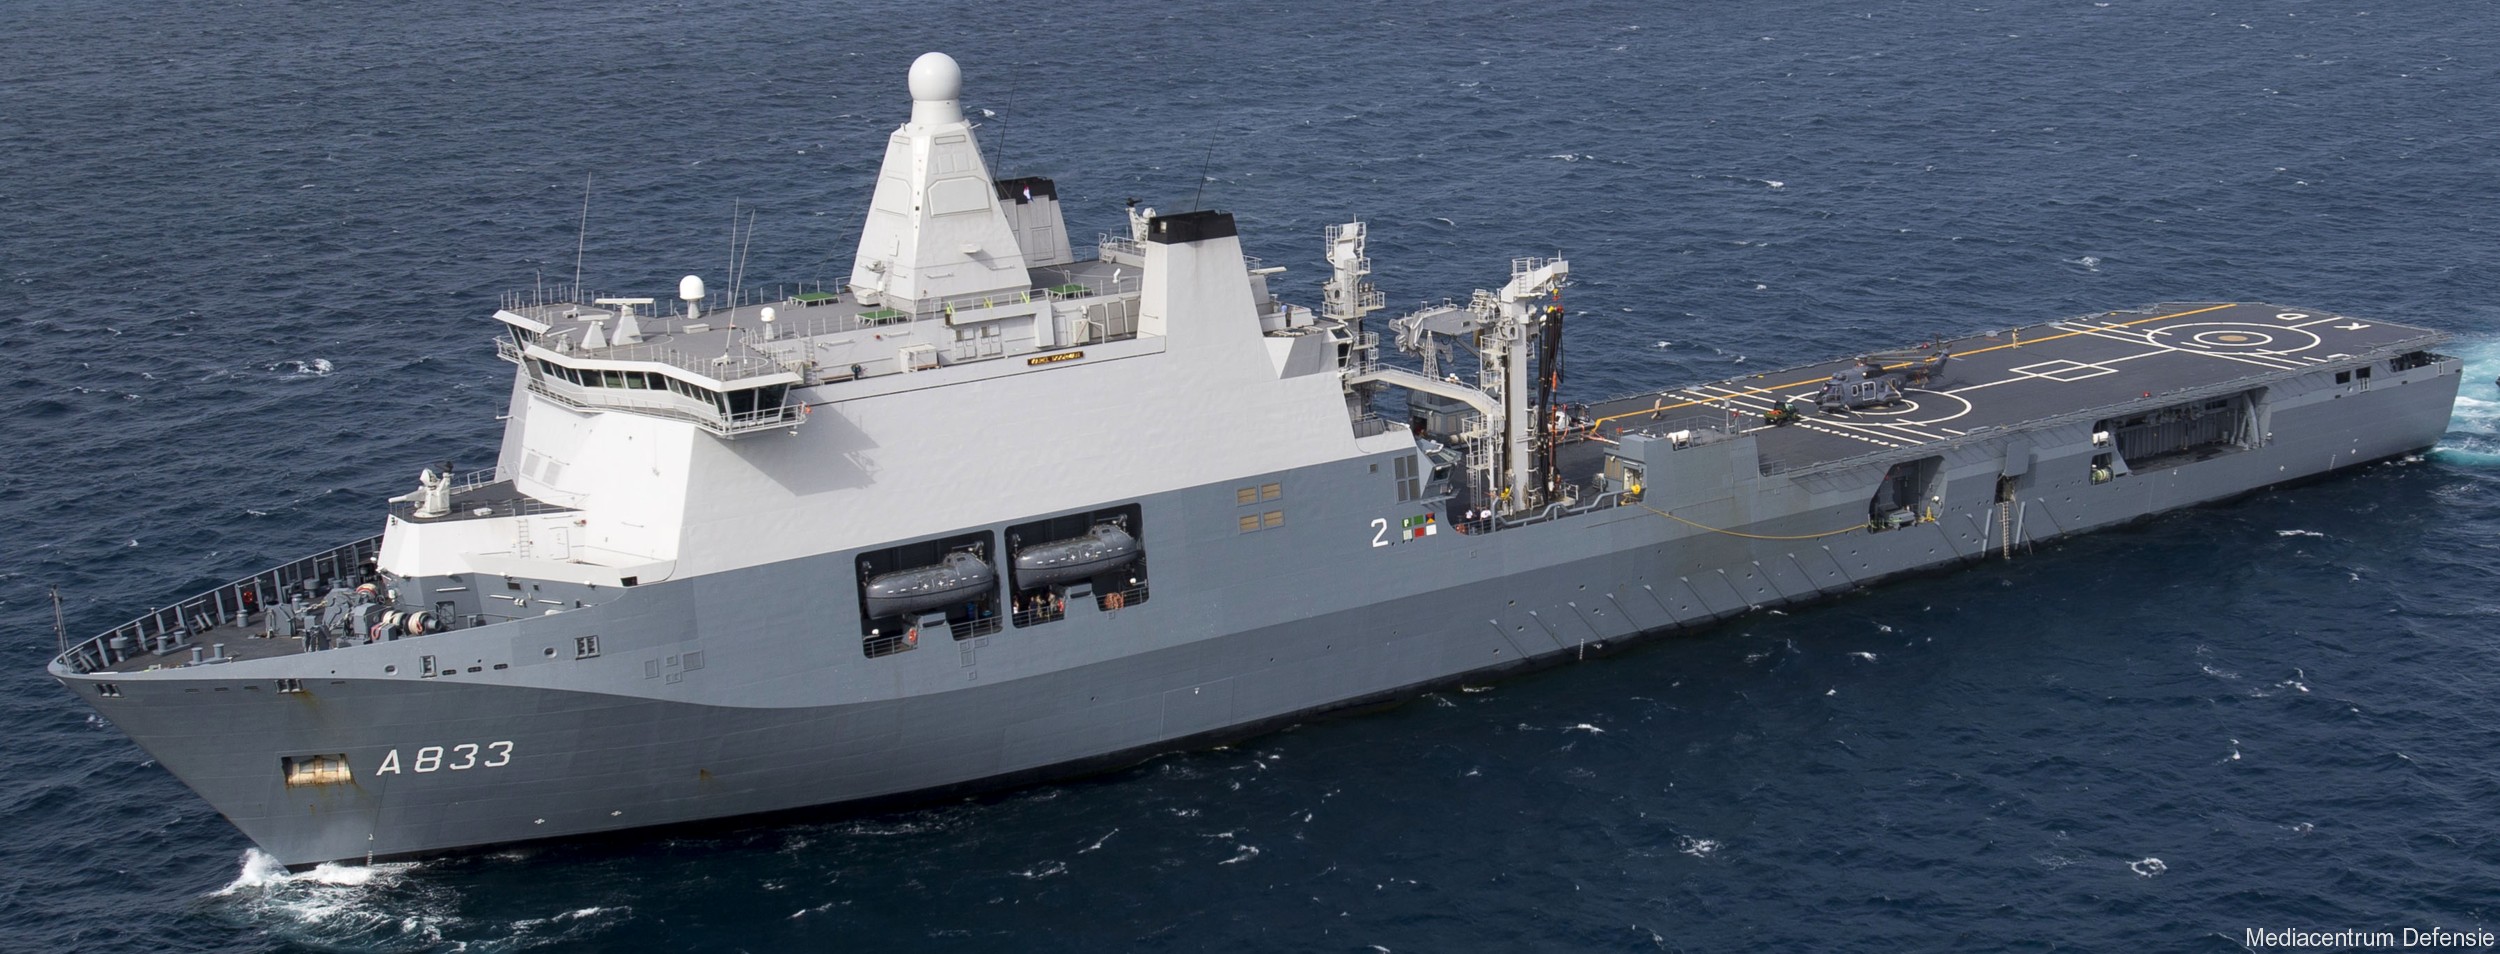 a-833 hnlms karel doorman joint support ship royal netherlands navy koninklijke marine 29